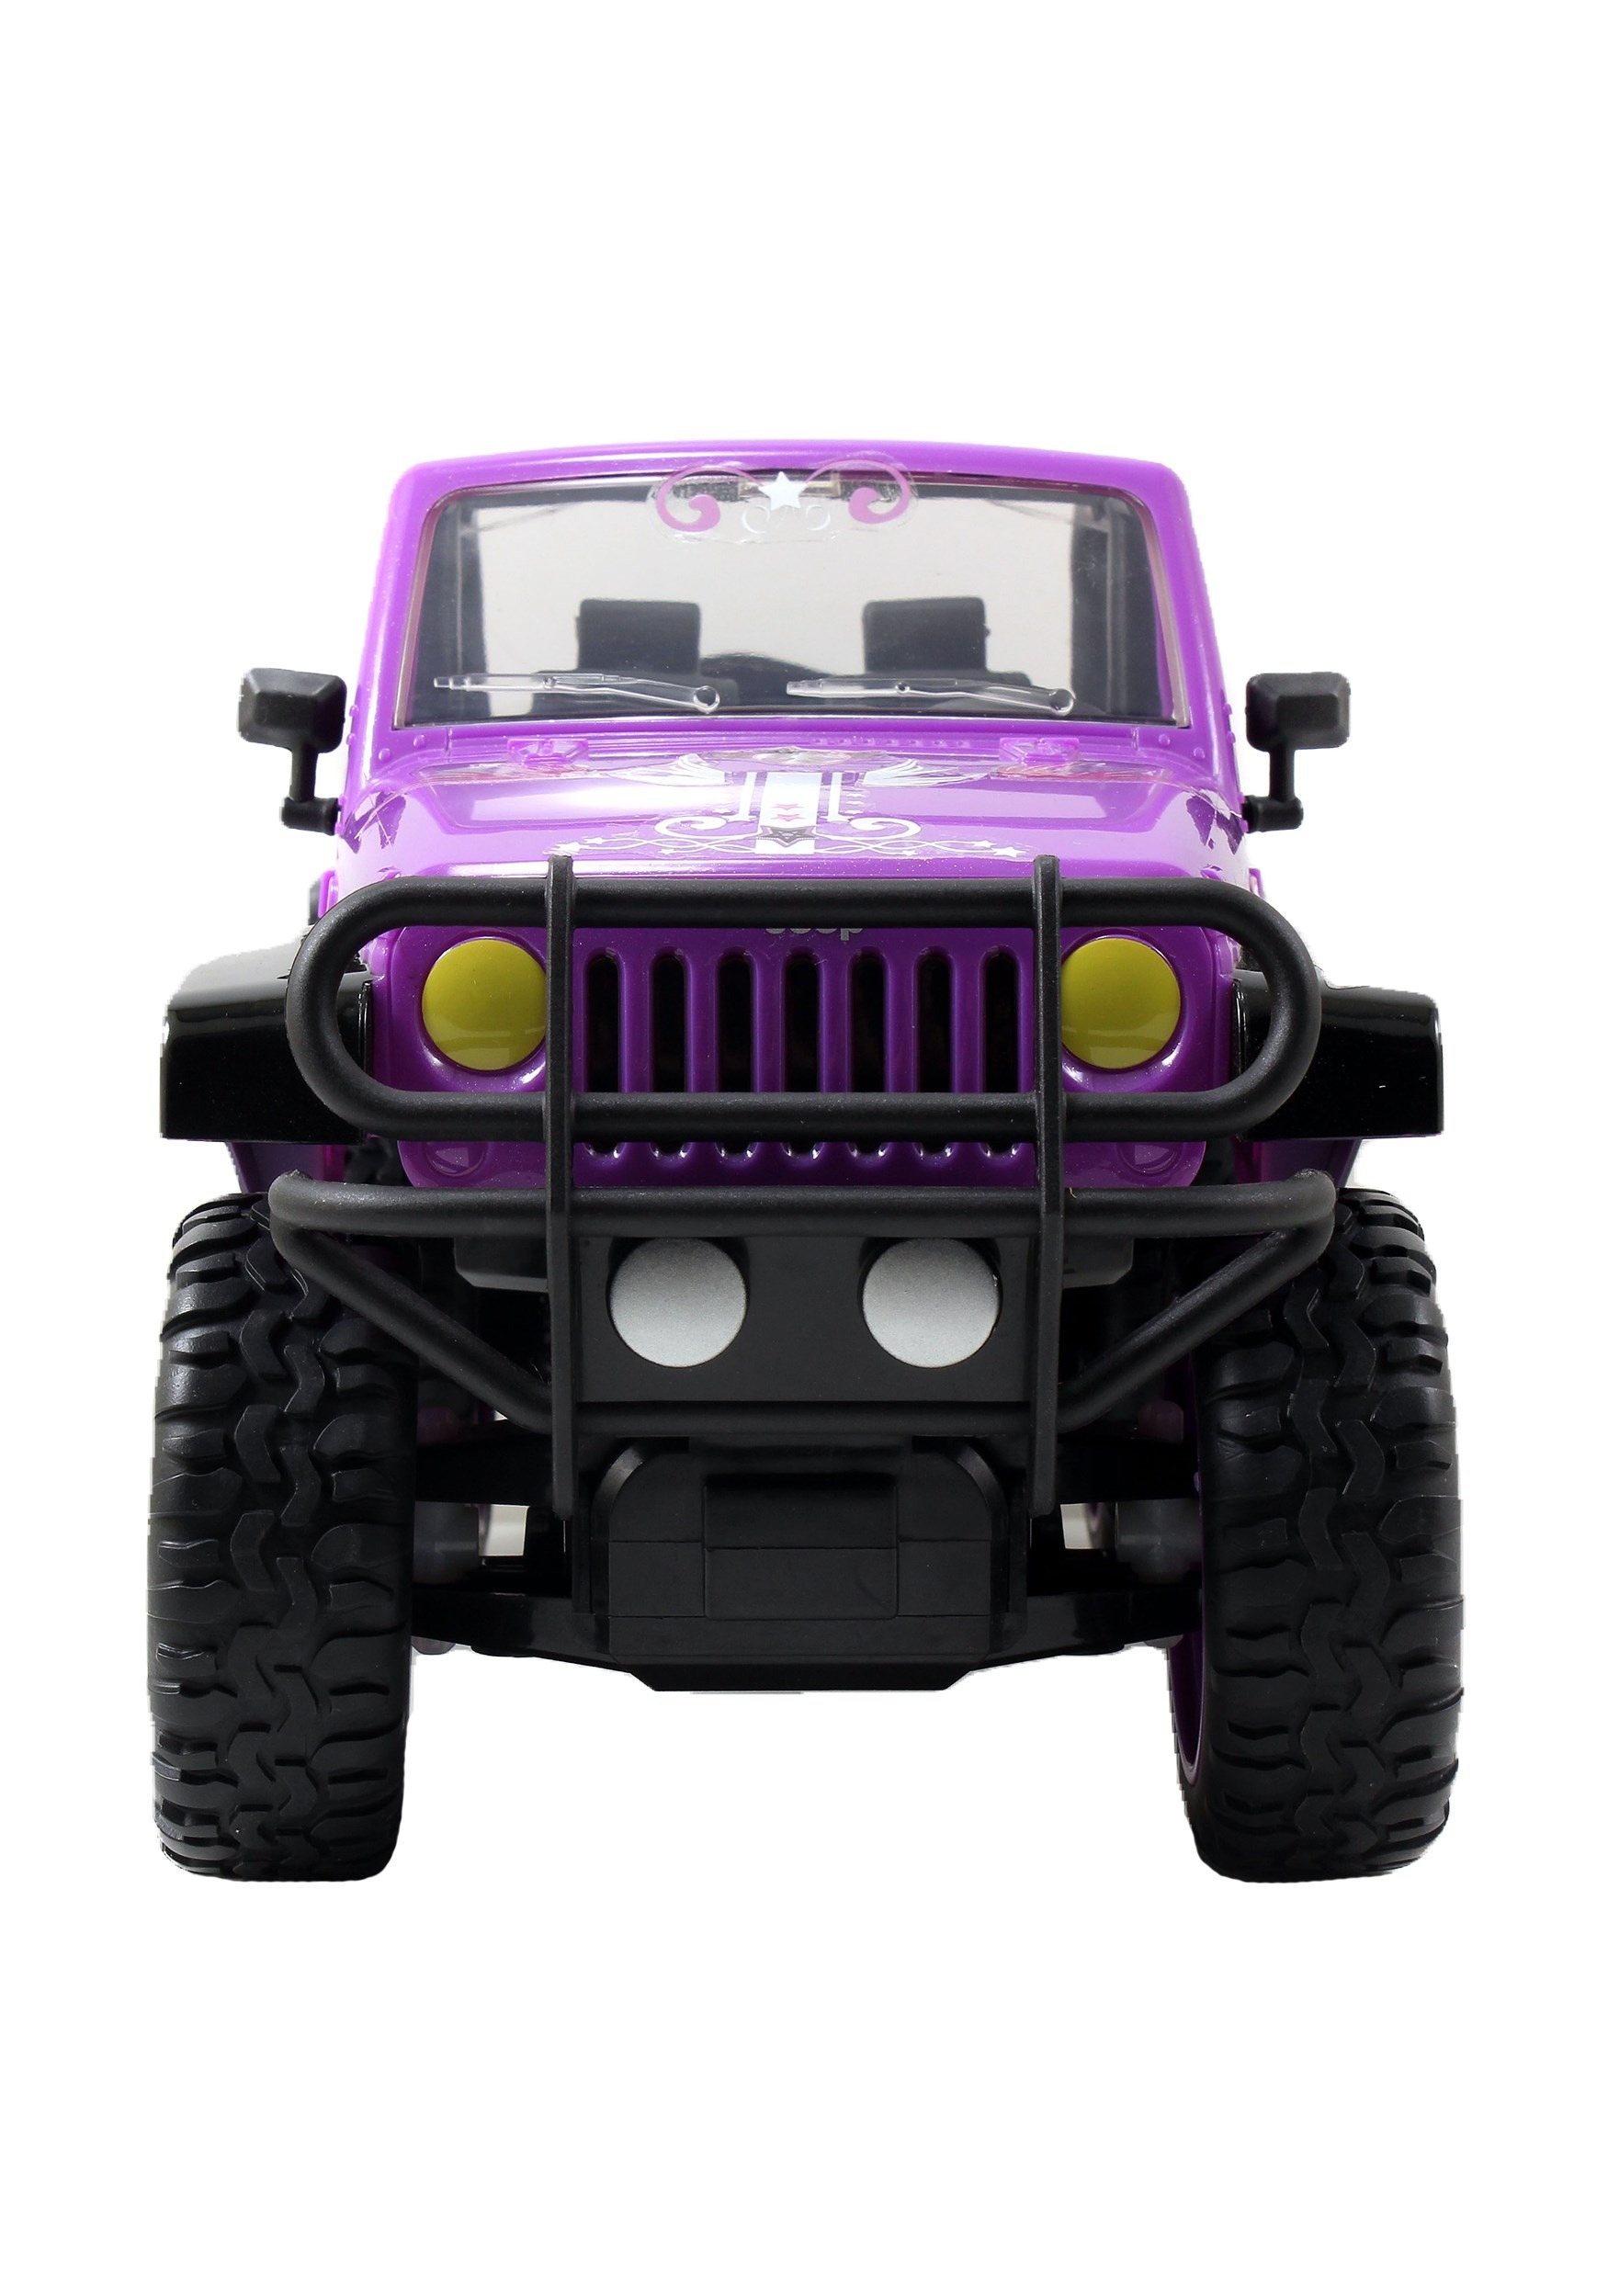 Girlmazing Jeep Wrangler Remote Control Toy Vehicle